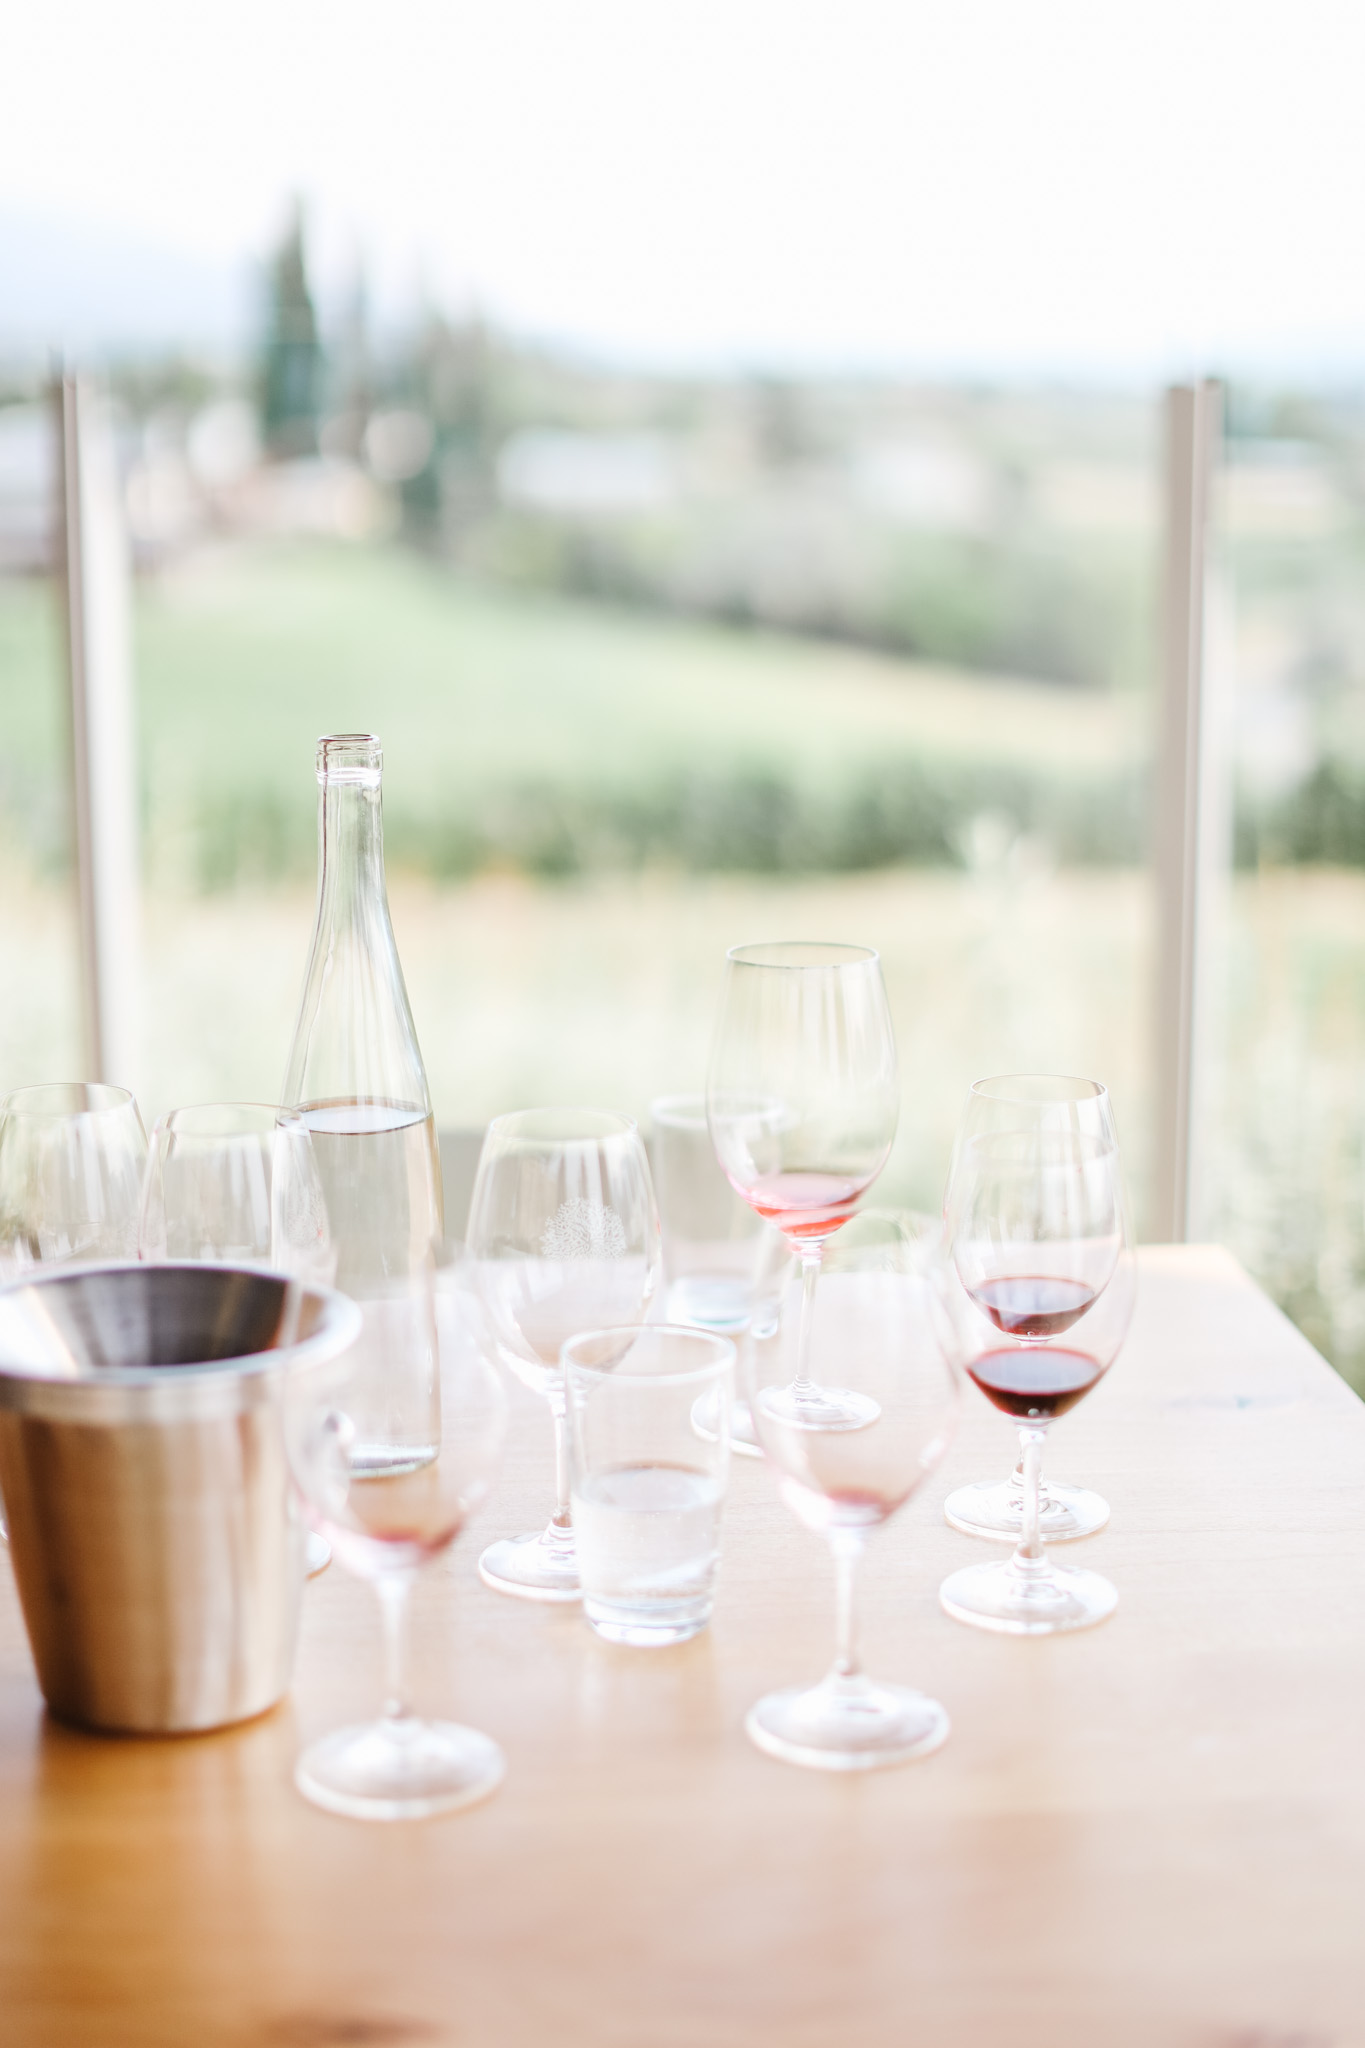 Poplar Grove wine tasting glasses at winery